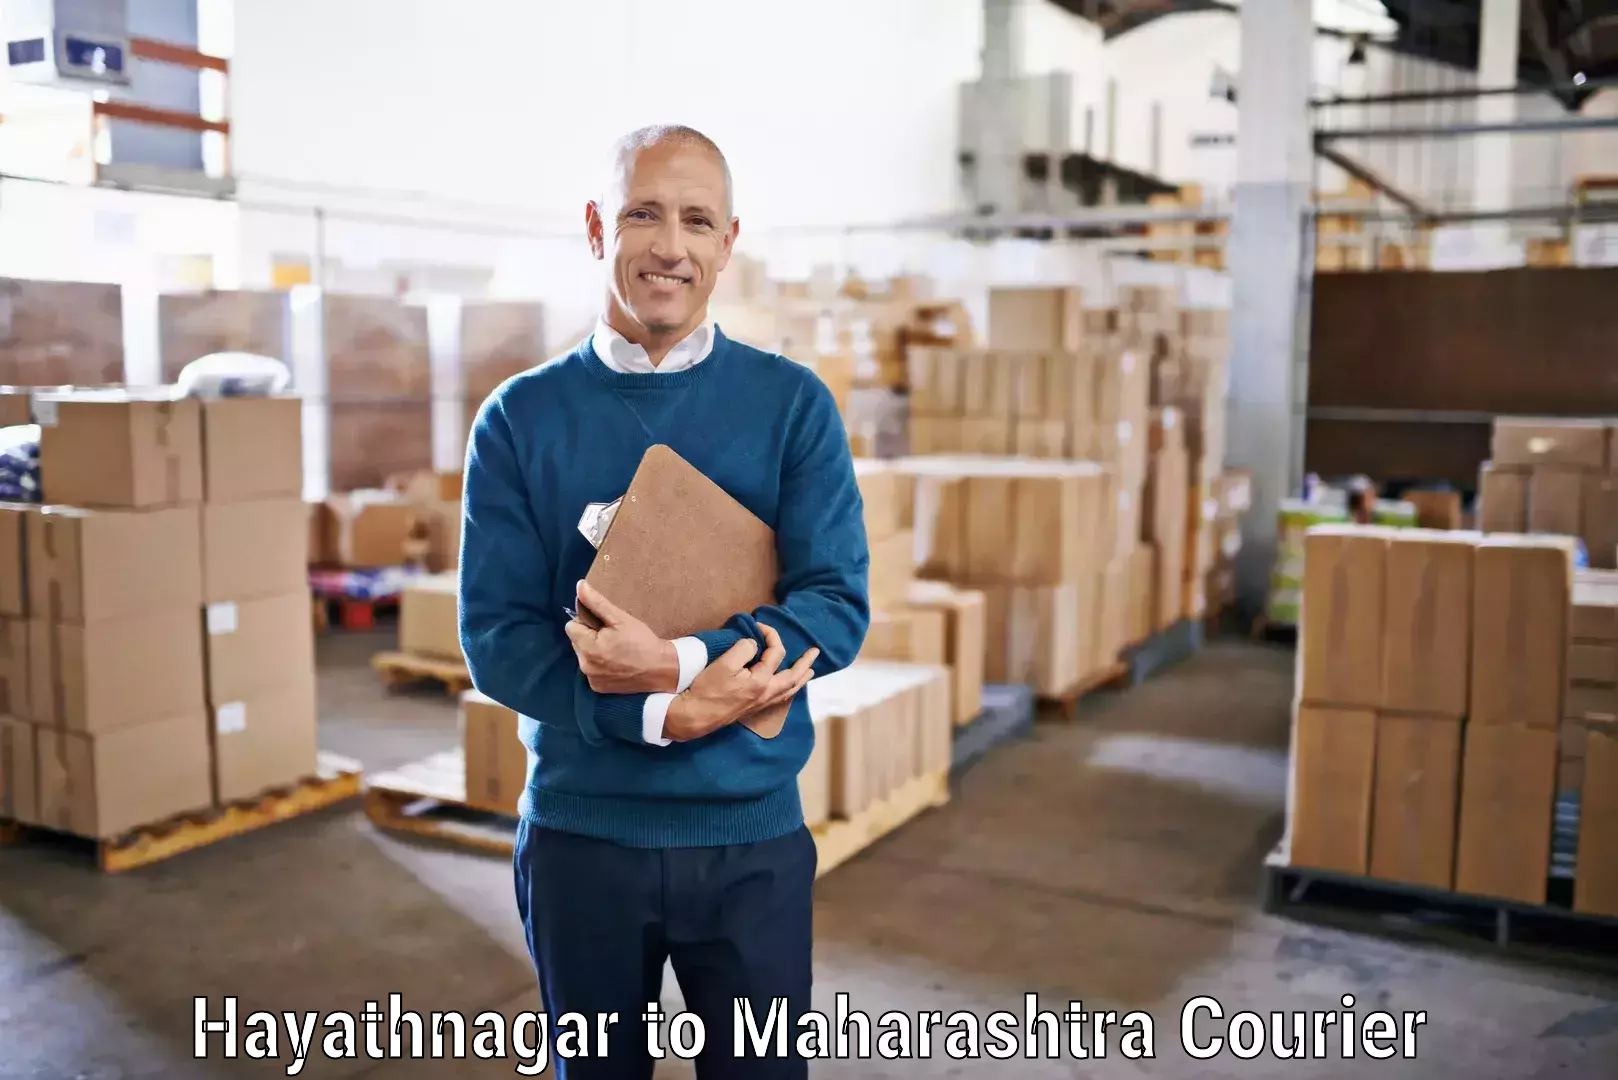 Reliable delivery network Hayathnagar to Lonar